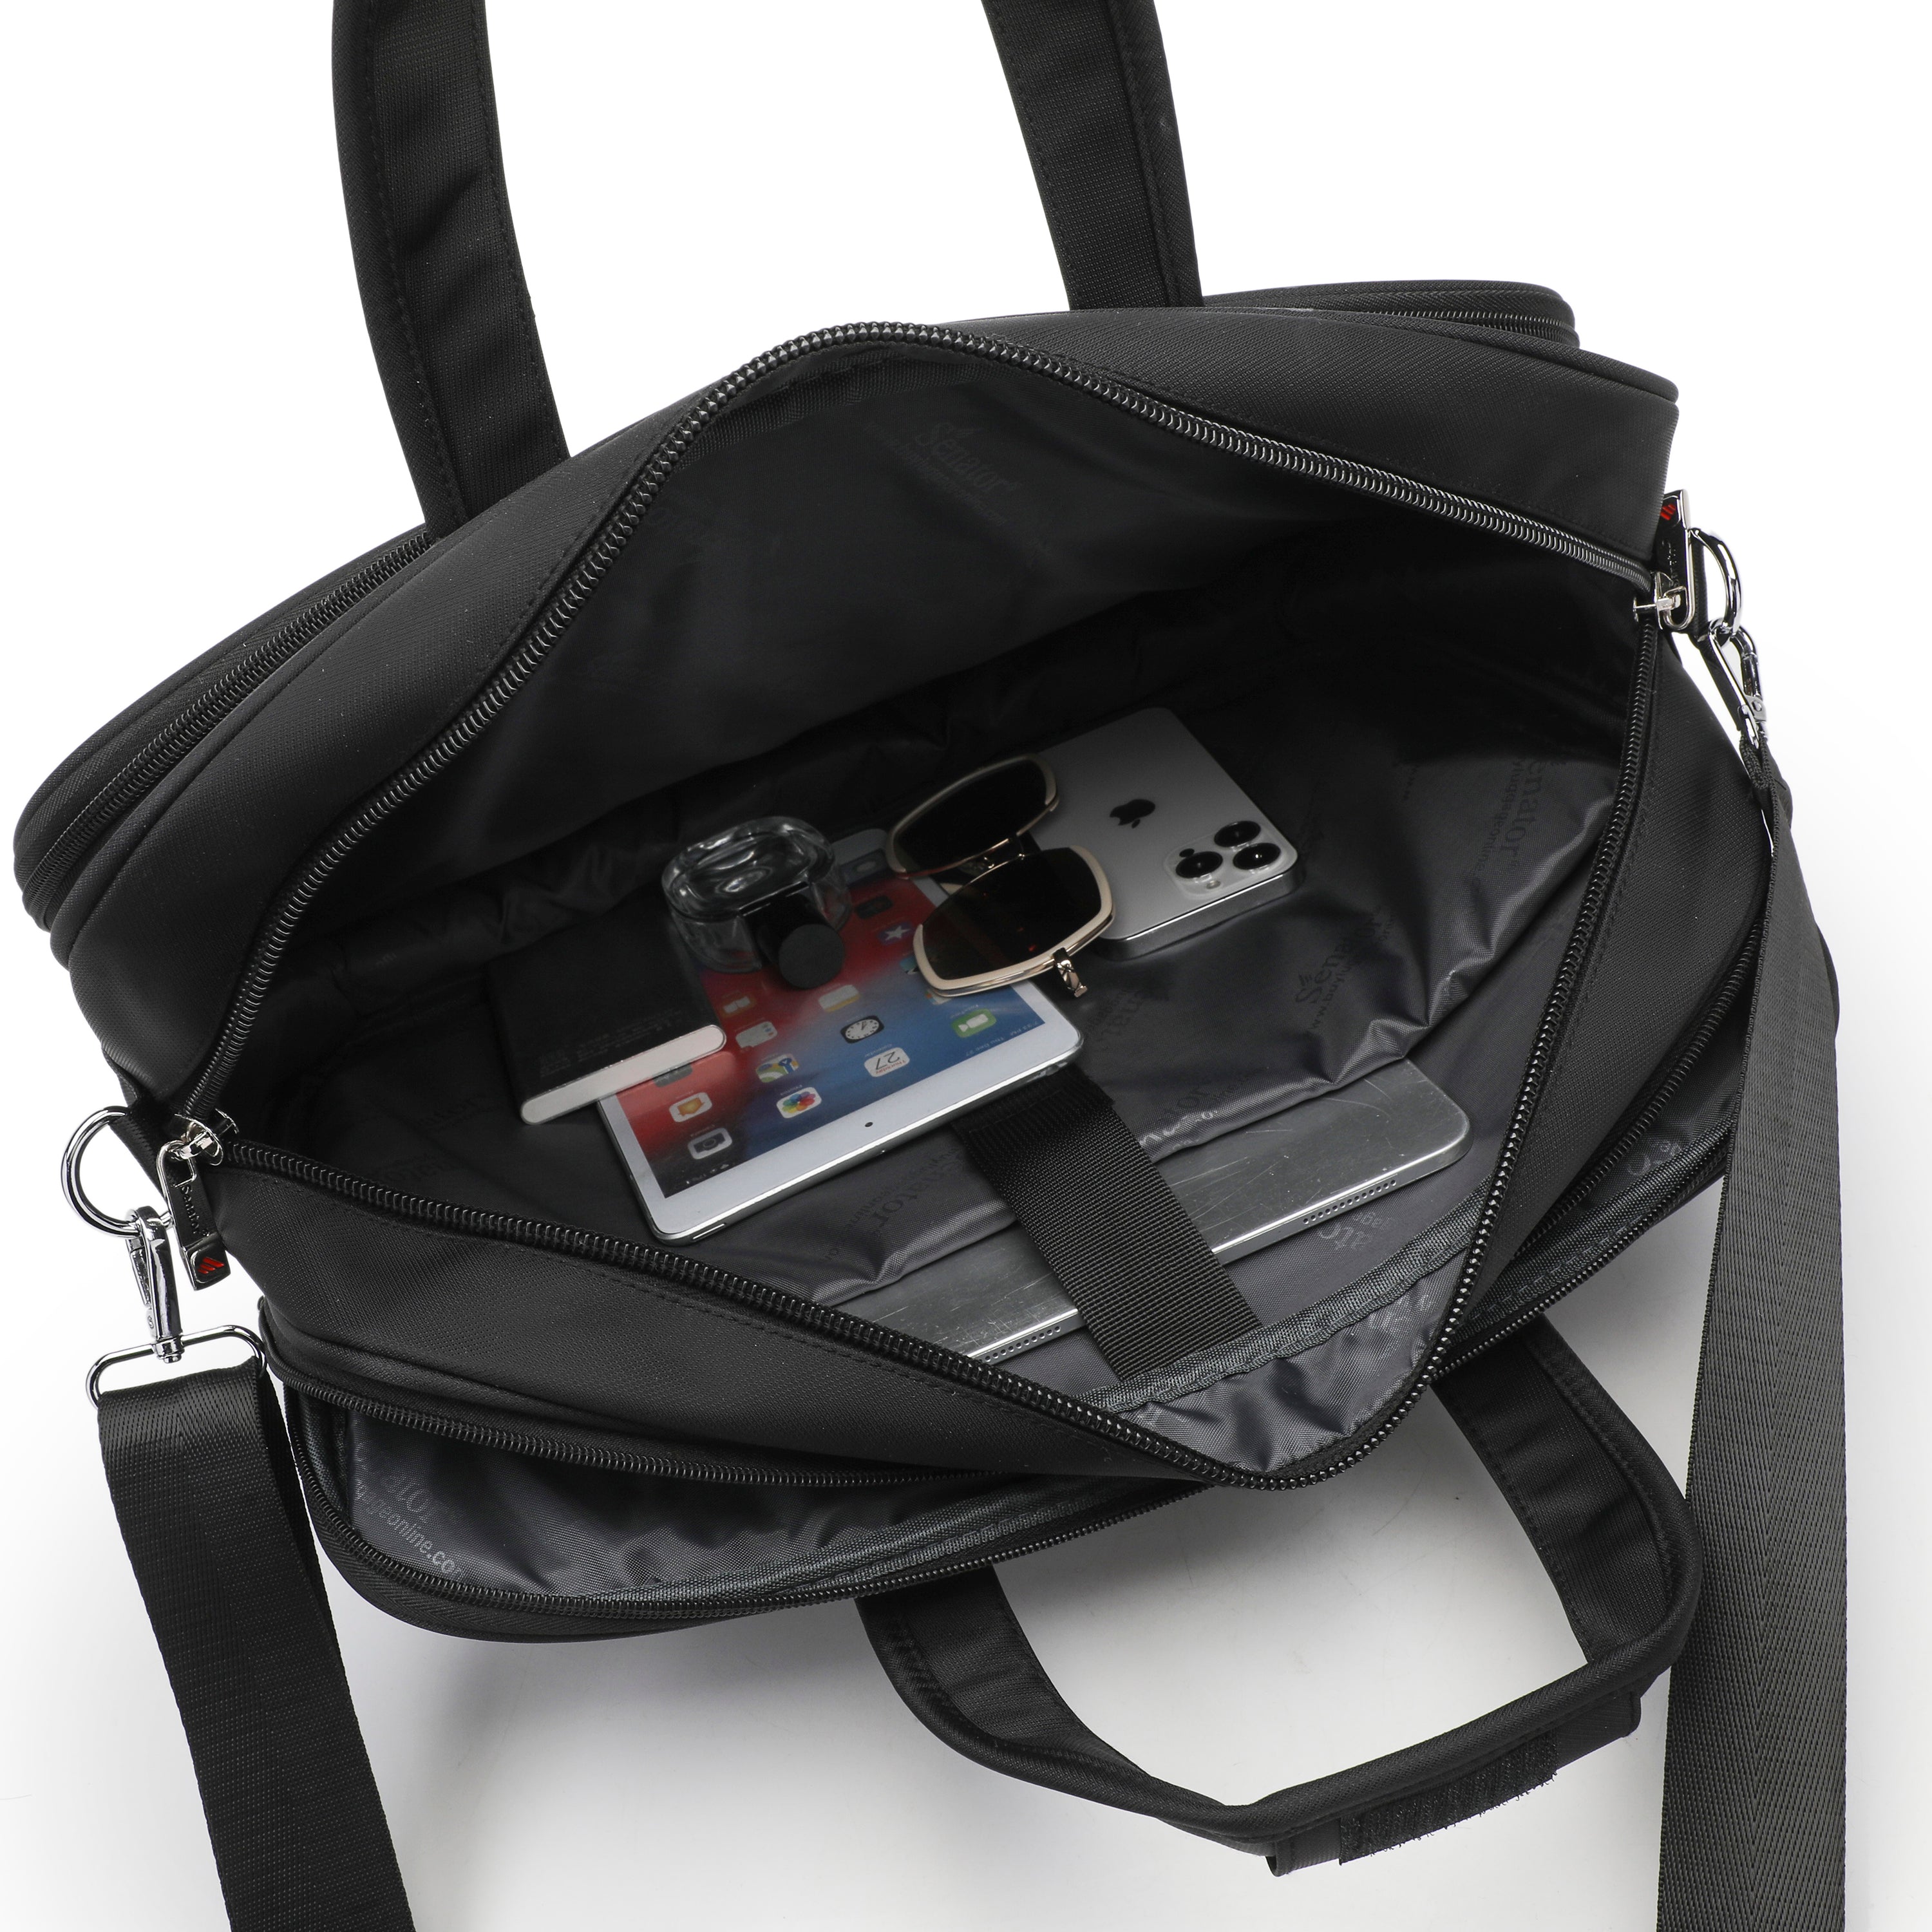 Senator 17 Inch Nylon Laptop Carrying Case Lightweight Water-Resistant Bag and Adjustable Shoulder Straps Laptop Bag Business College School Students KH8046